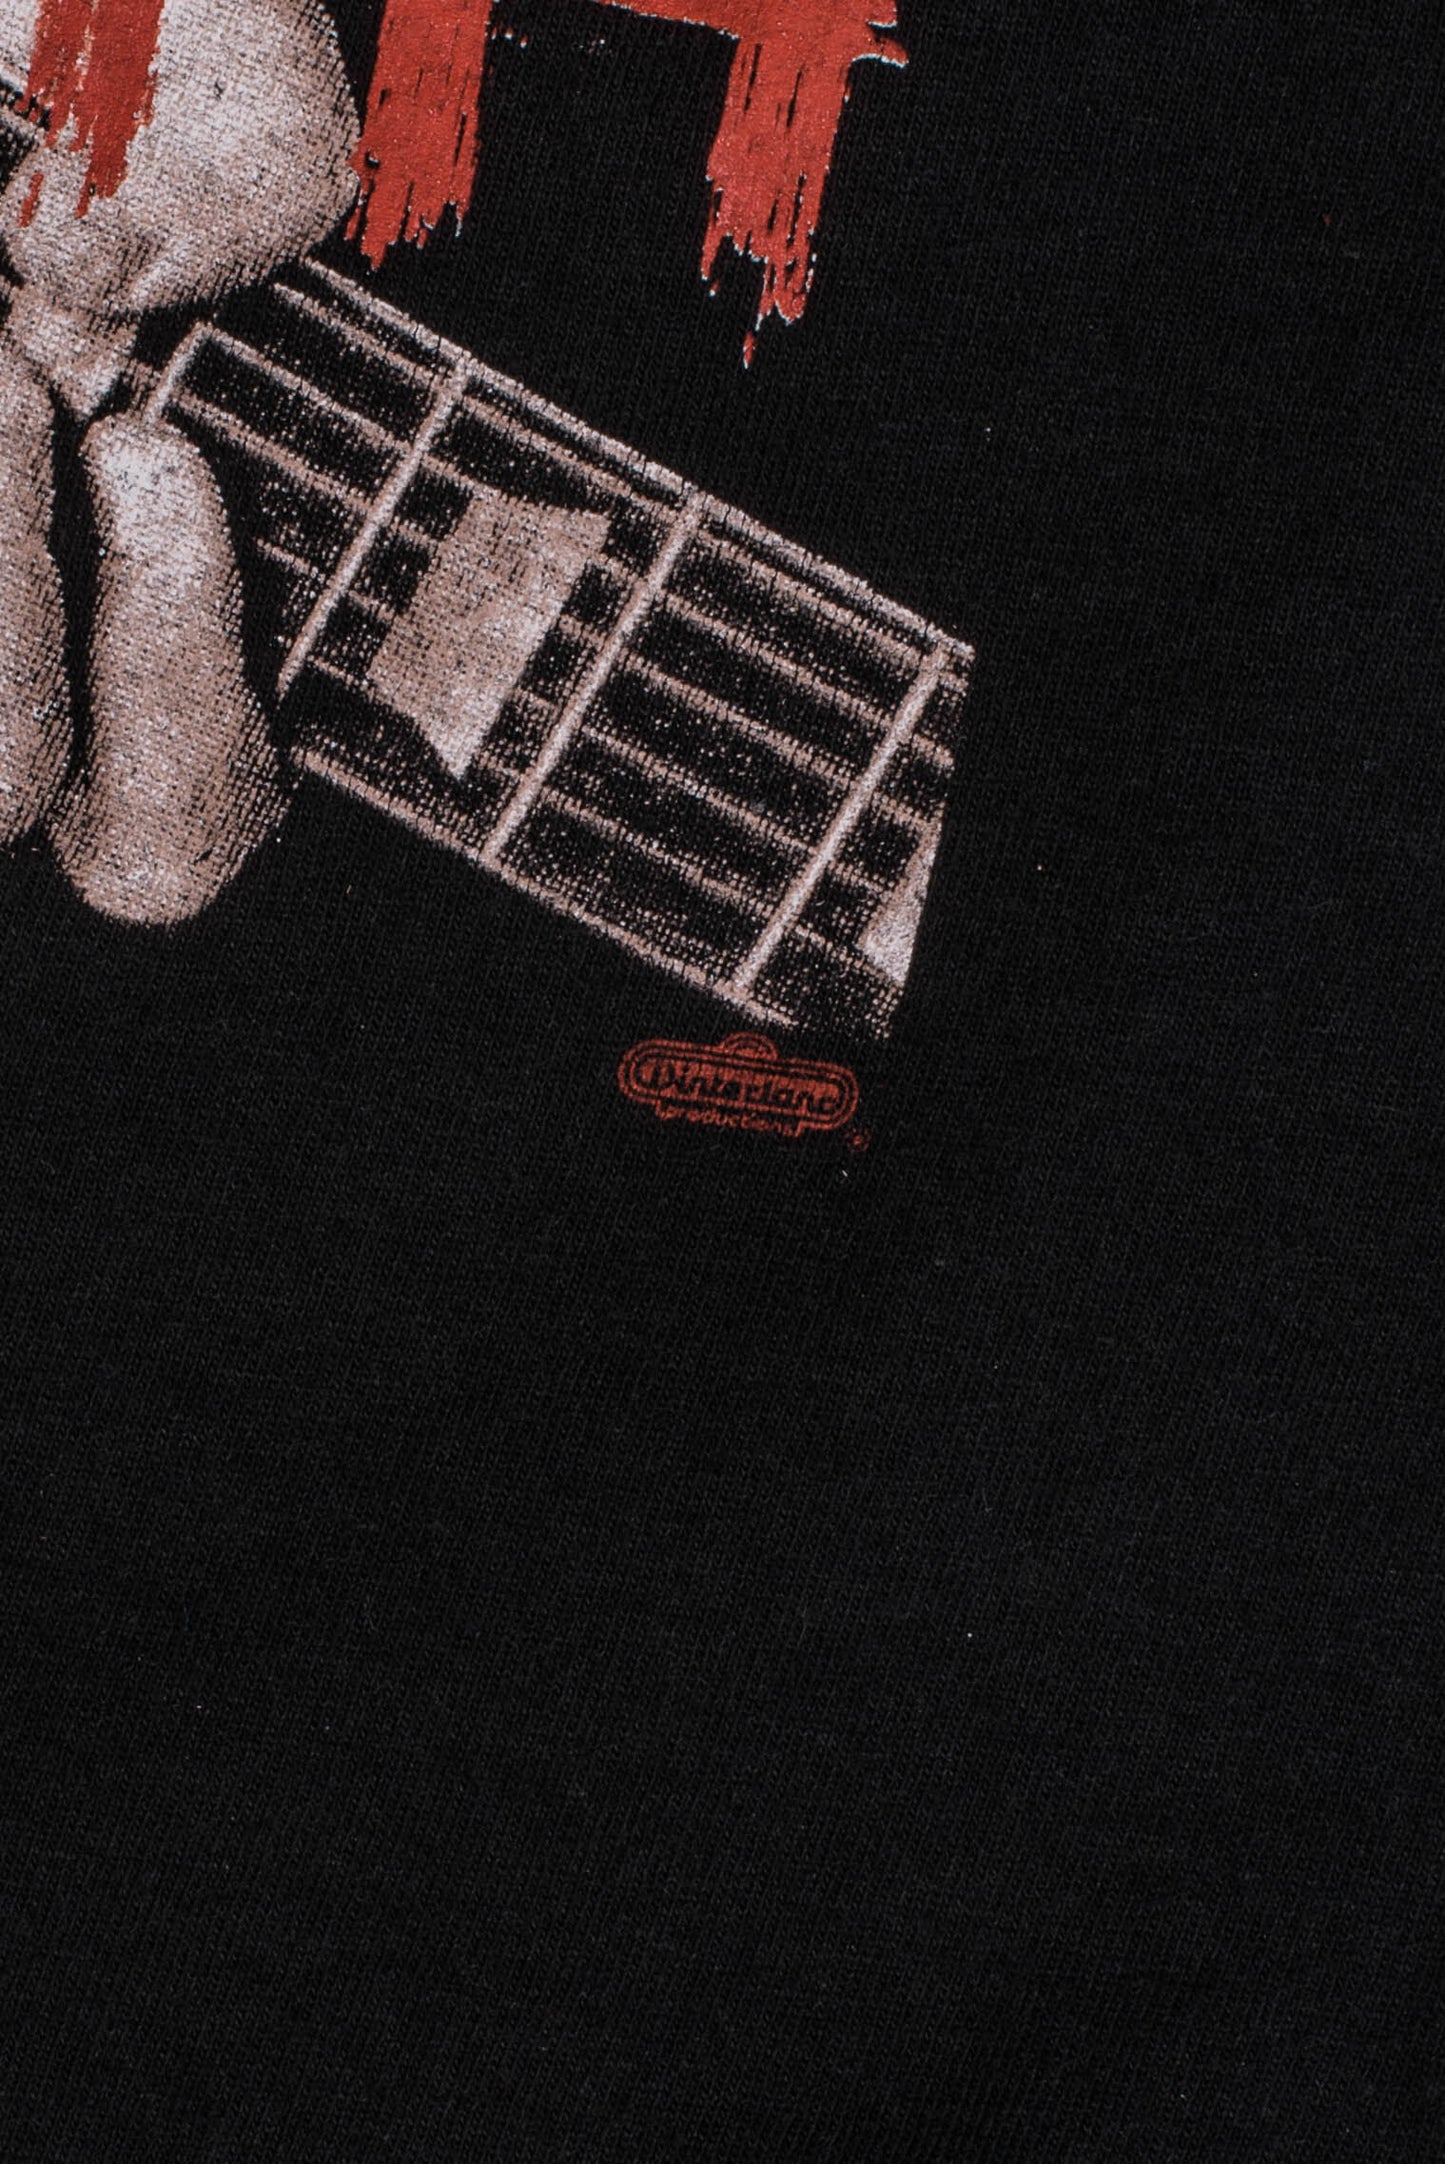 Vintage 1994 Elvis Costello Brutal Truth Tour T-Shirt